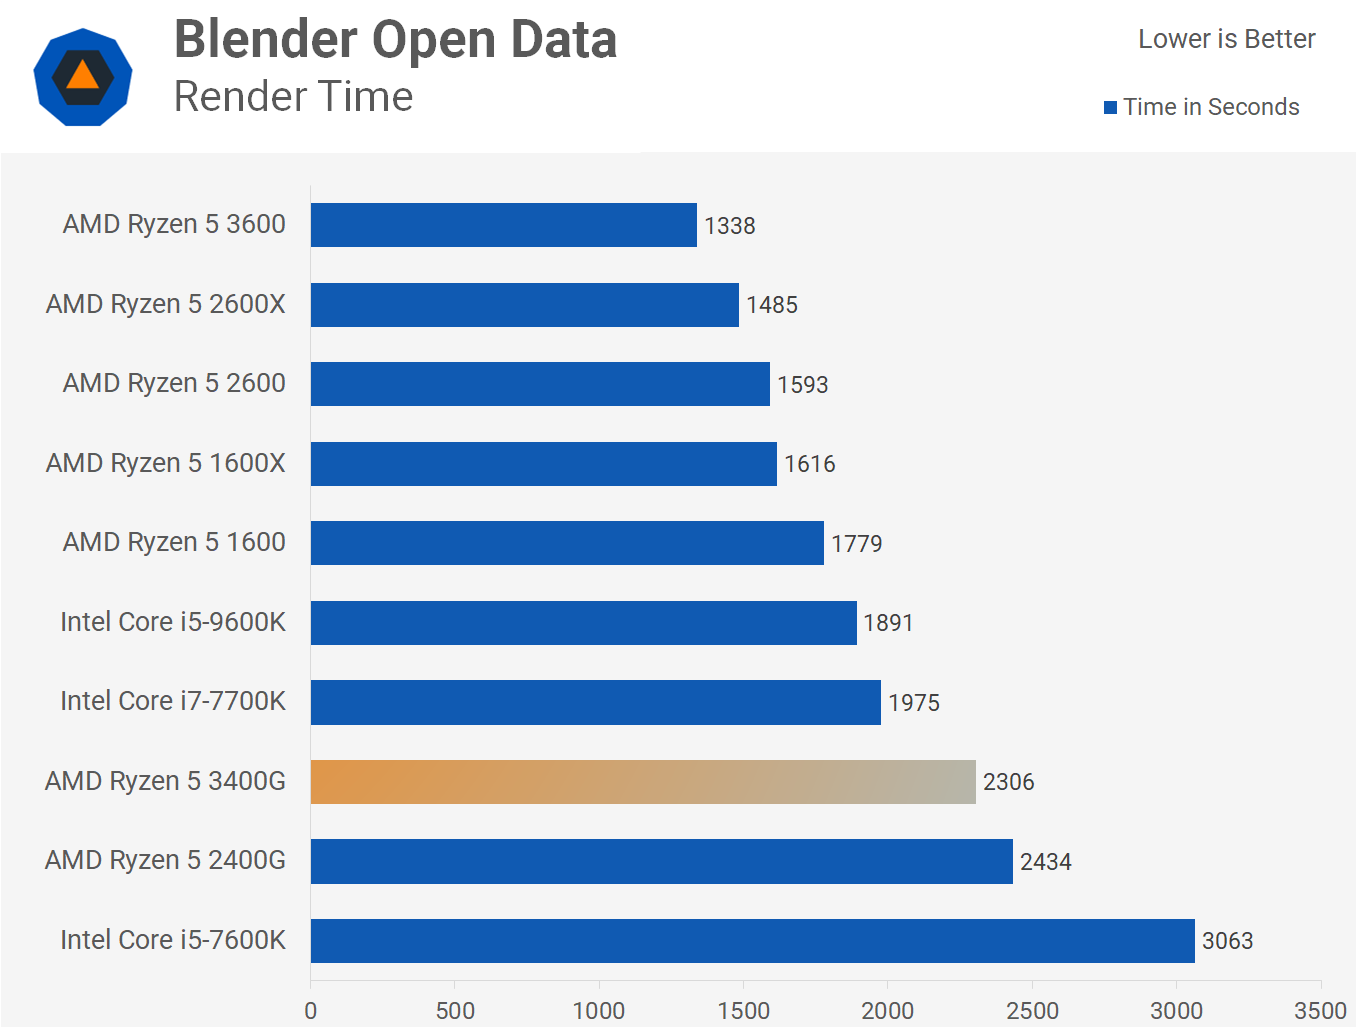 Blender Open Data AMD Ryzen™ 5 3400G